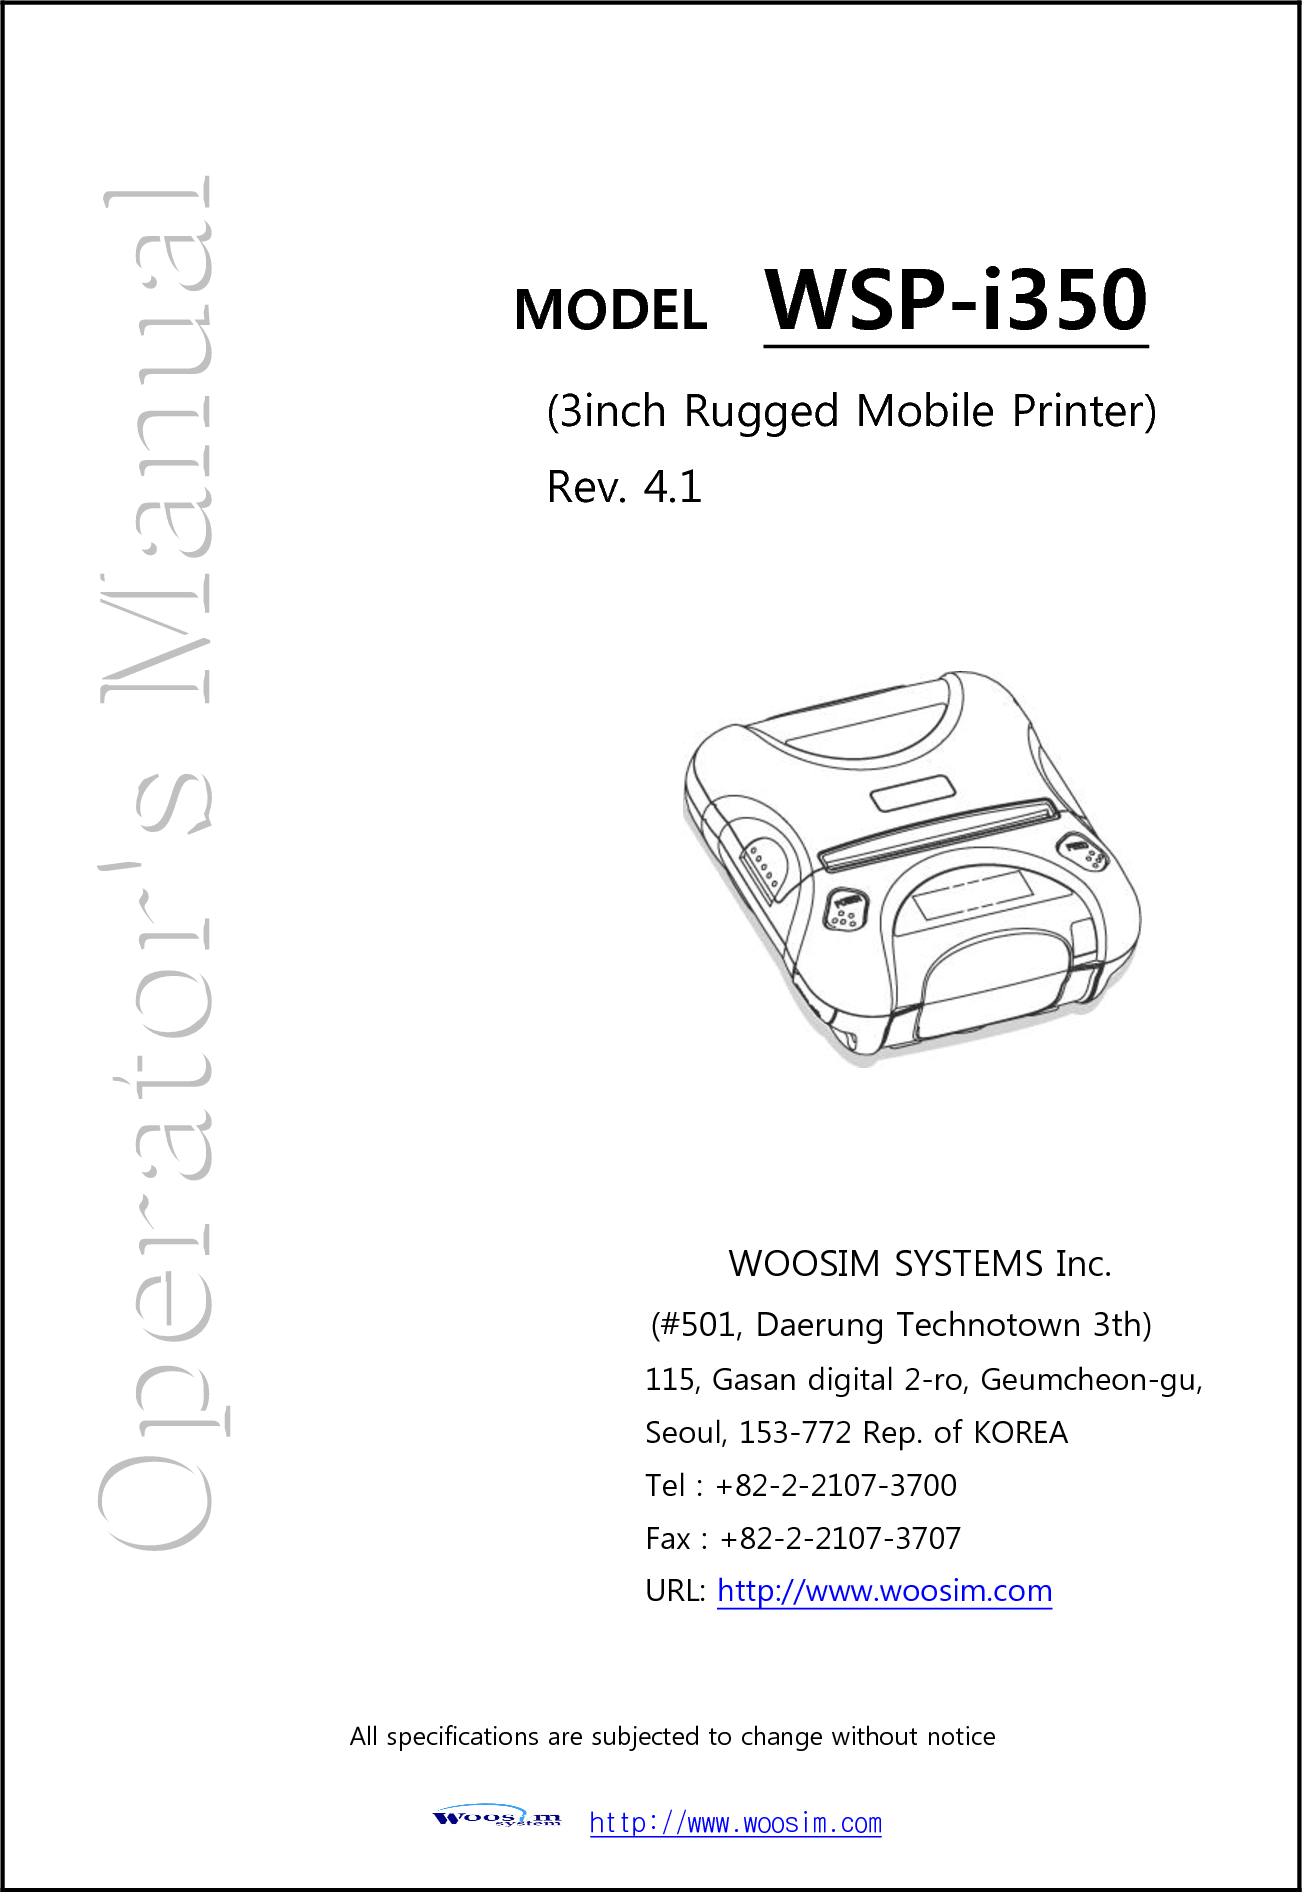  http://www.woosim.com                                                        MODEL    WSP-i350    (3inch Rugged Mobile Printer)  Rev. 4.1 WOOSIM SYSTEMS Inc. (#501, Daerung Technotown 3th) 115, Gasan digital 2-ro, Geumcheon-gu, Seoul, 153-772 Rep. of KOREA Tel : +82-2-2107-3700 Fax : +82-2-2107-3707 URL: http://www.woosim.com   All specifications are subjected to change without notice 